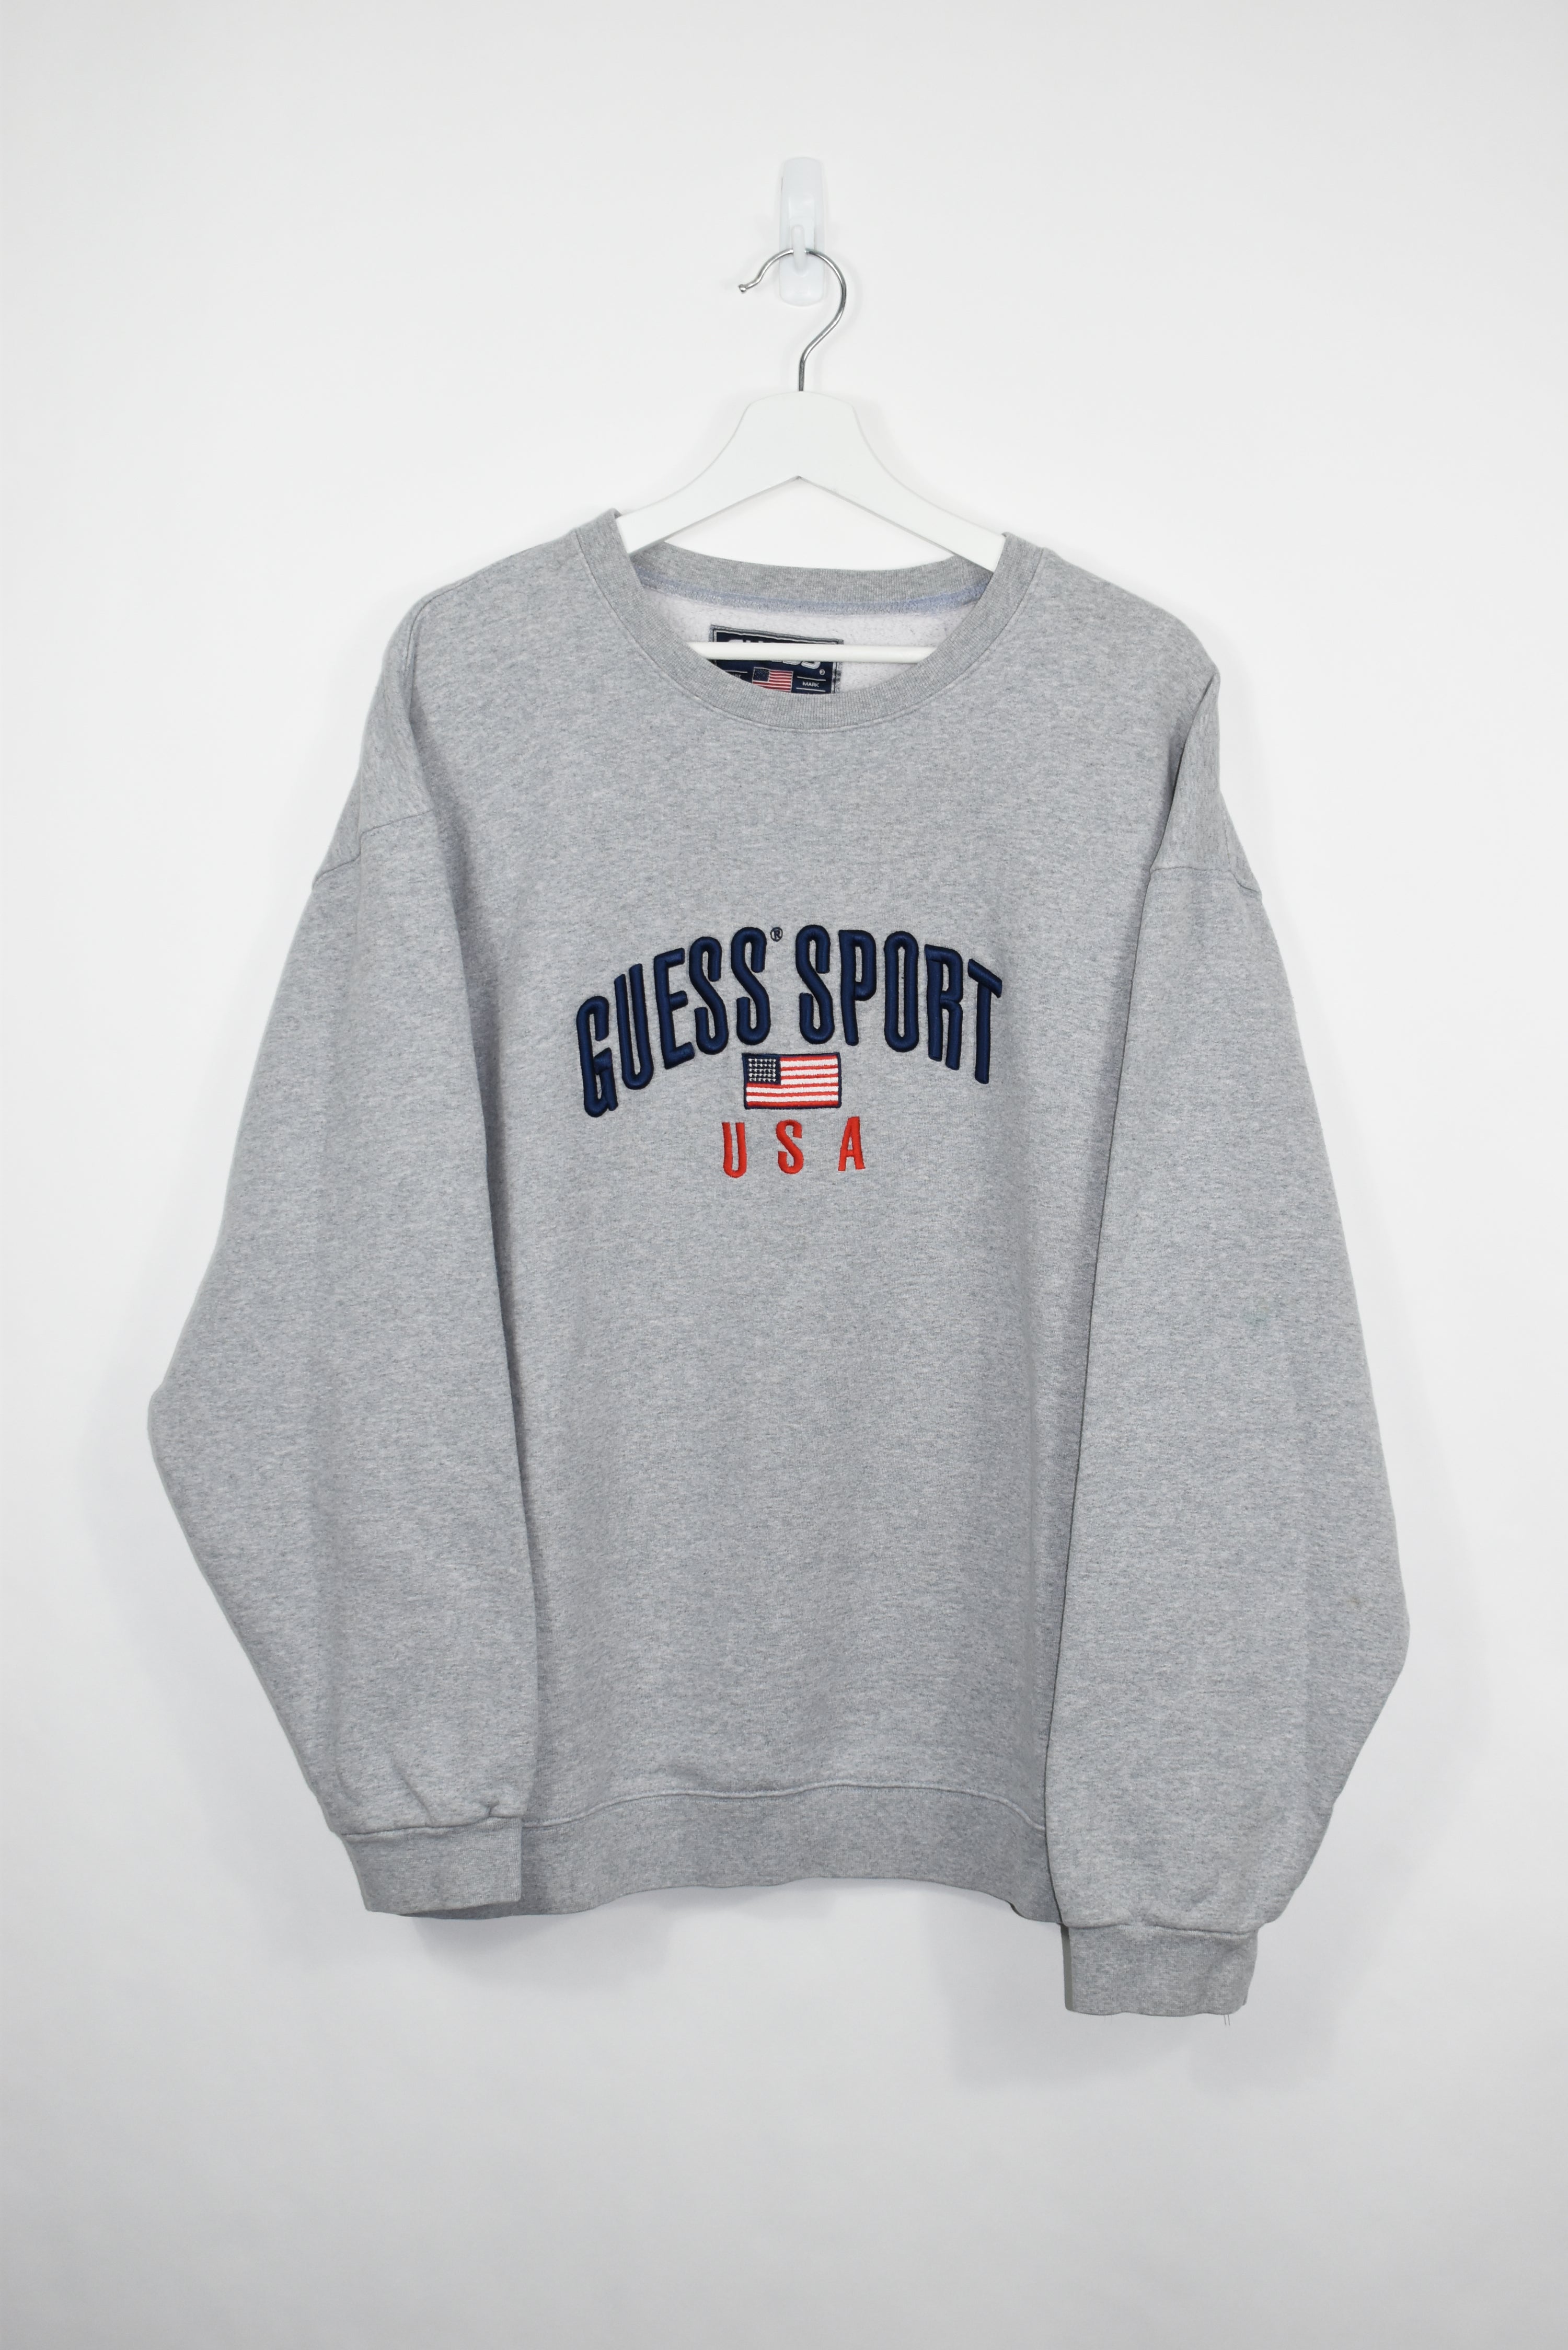 Vintage Guess Sport Embroidery Sweatshirt Xlarge